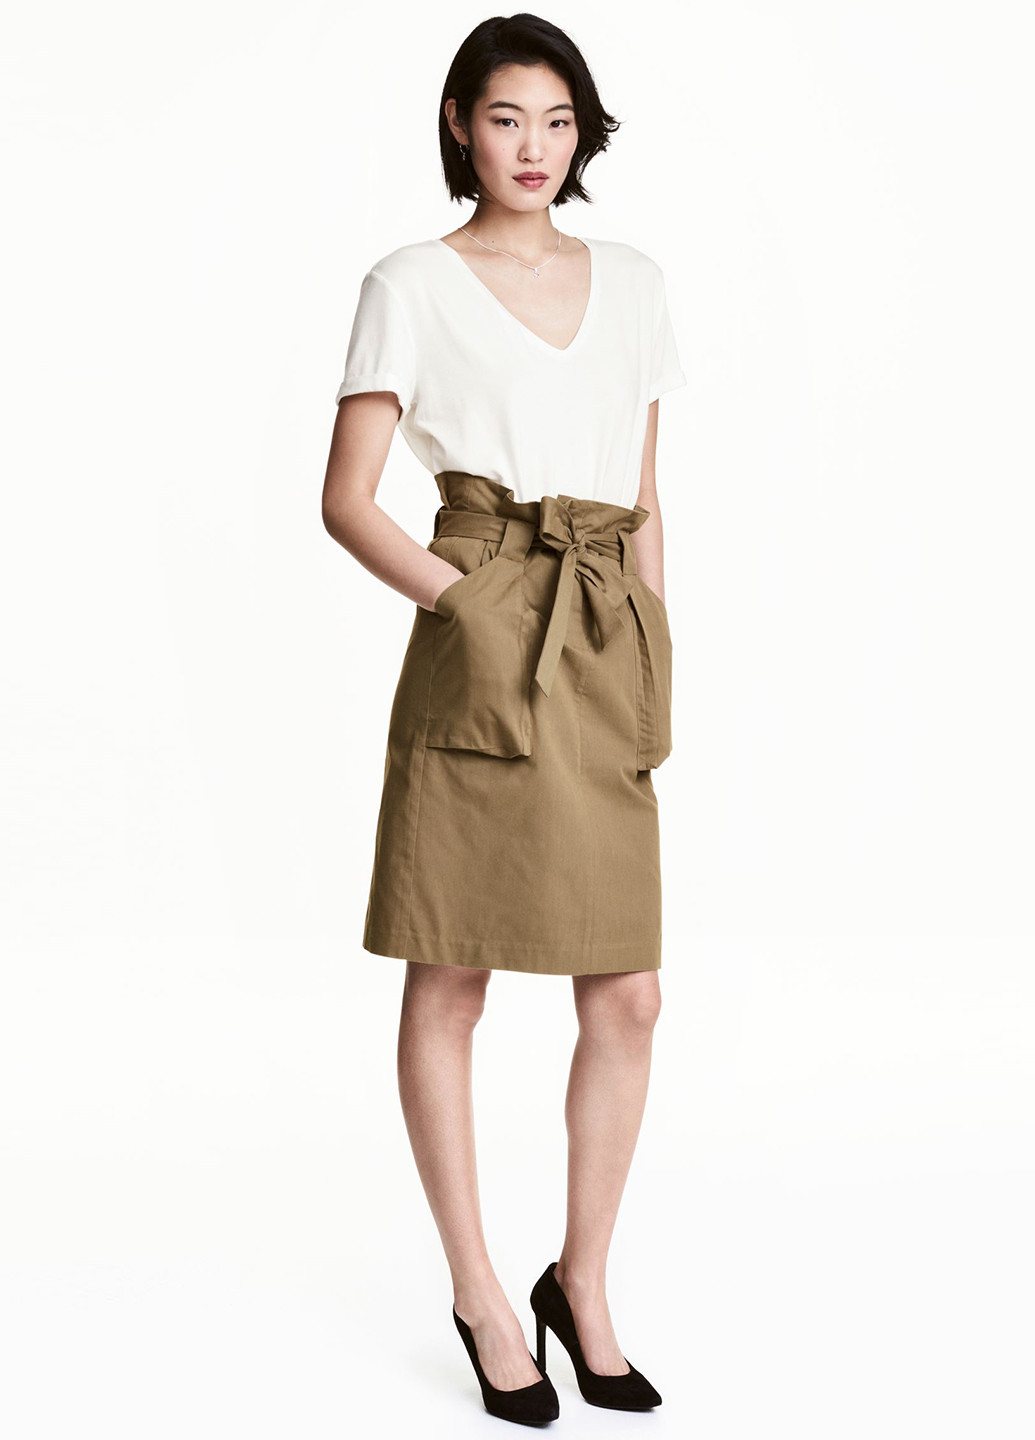 Оливковая (хаки) кэжуал однотонная юбка H&M а-силуэта (трапеция)